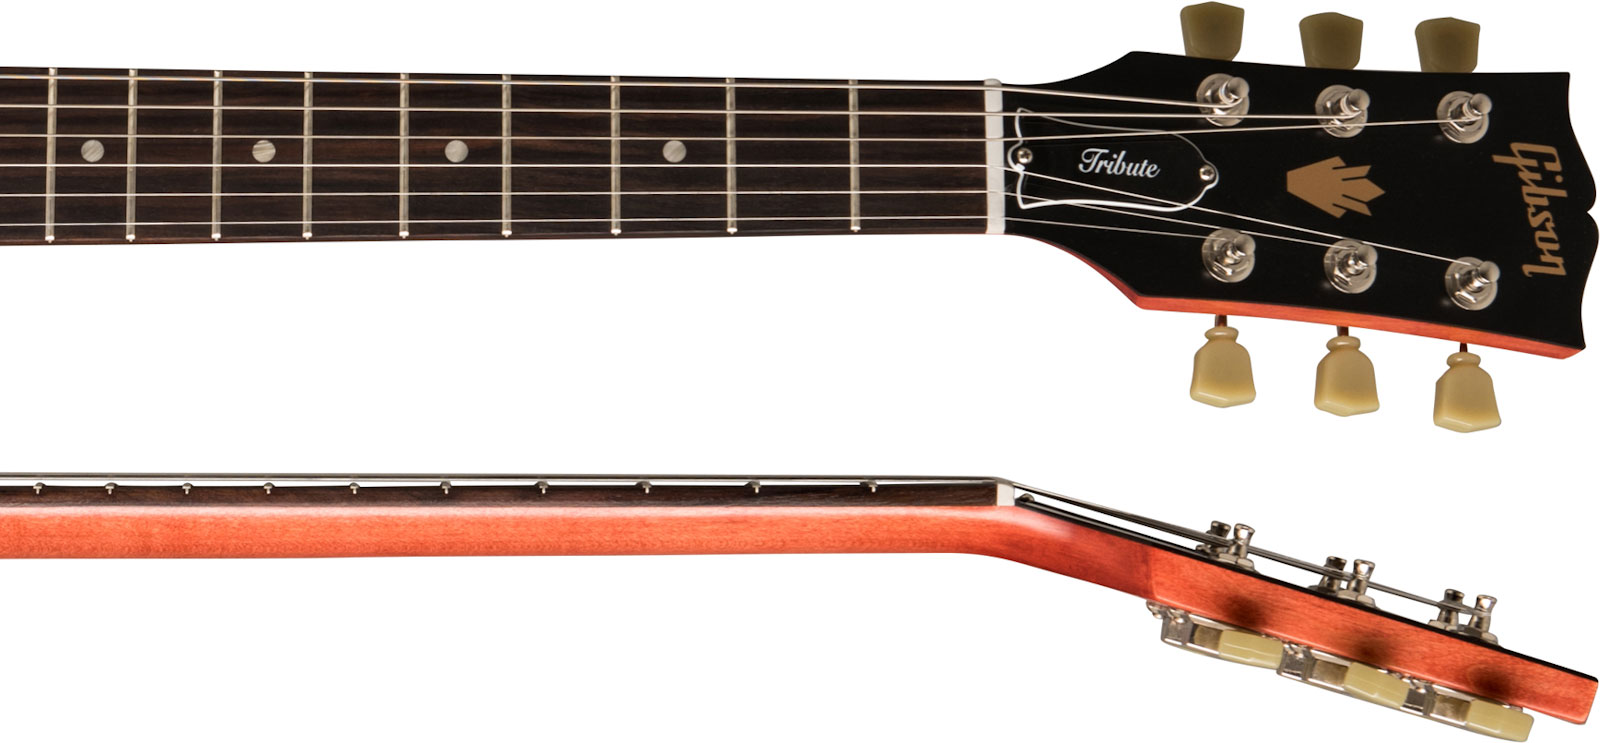 Gibson Sg Tribute Modern 2h Ht Rw - Vintage Cherry Satin - Guitarra electrica retro rock - Variation 3